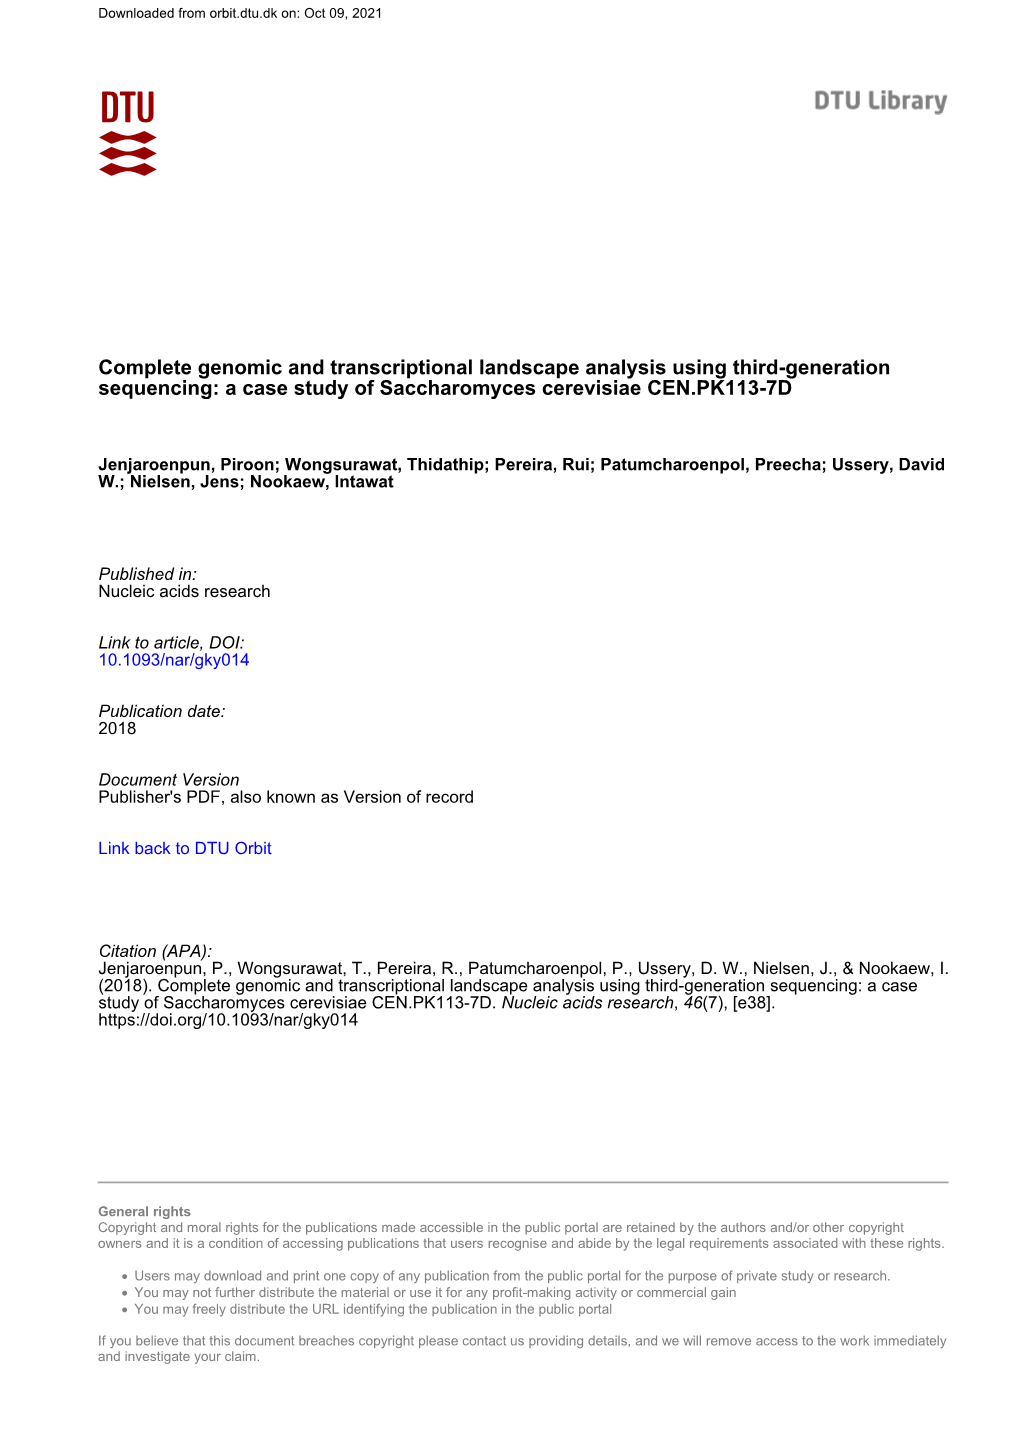 A Case Study of Saccharomyces Cerevisiae CEN.PK113-7D